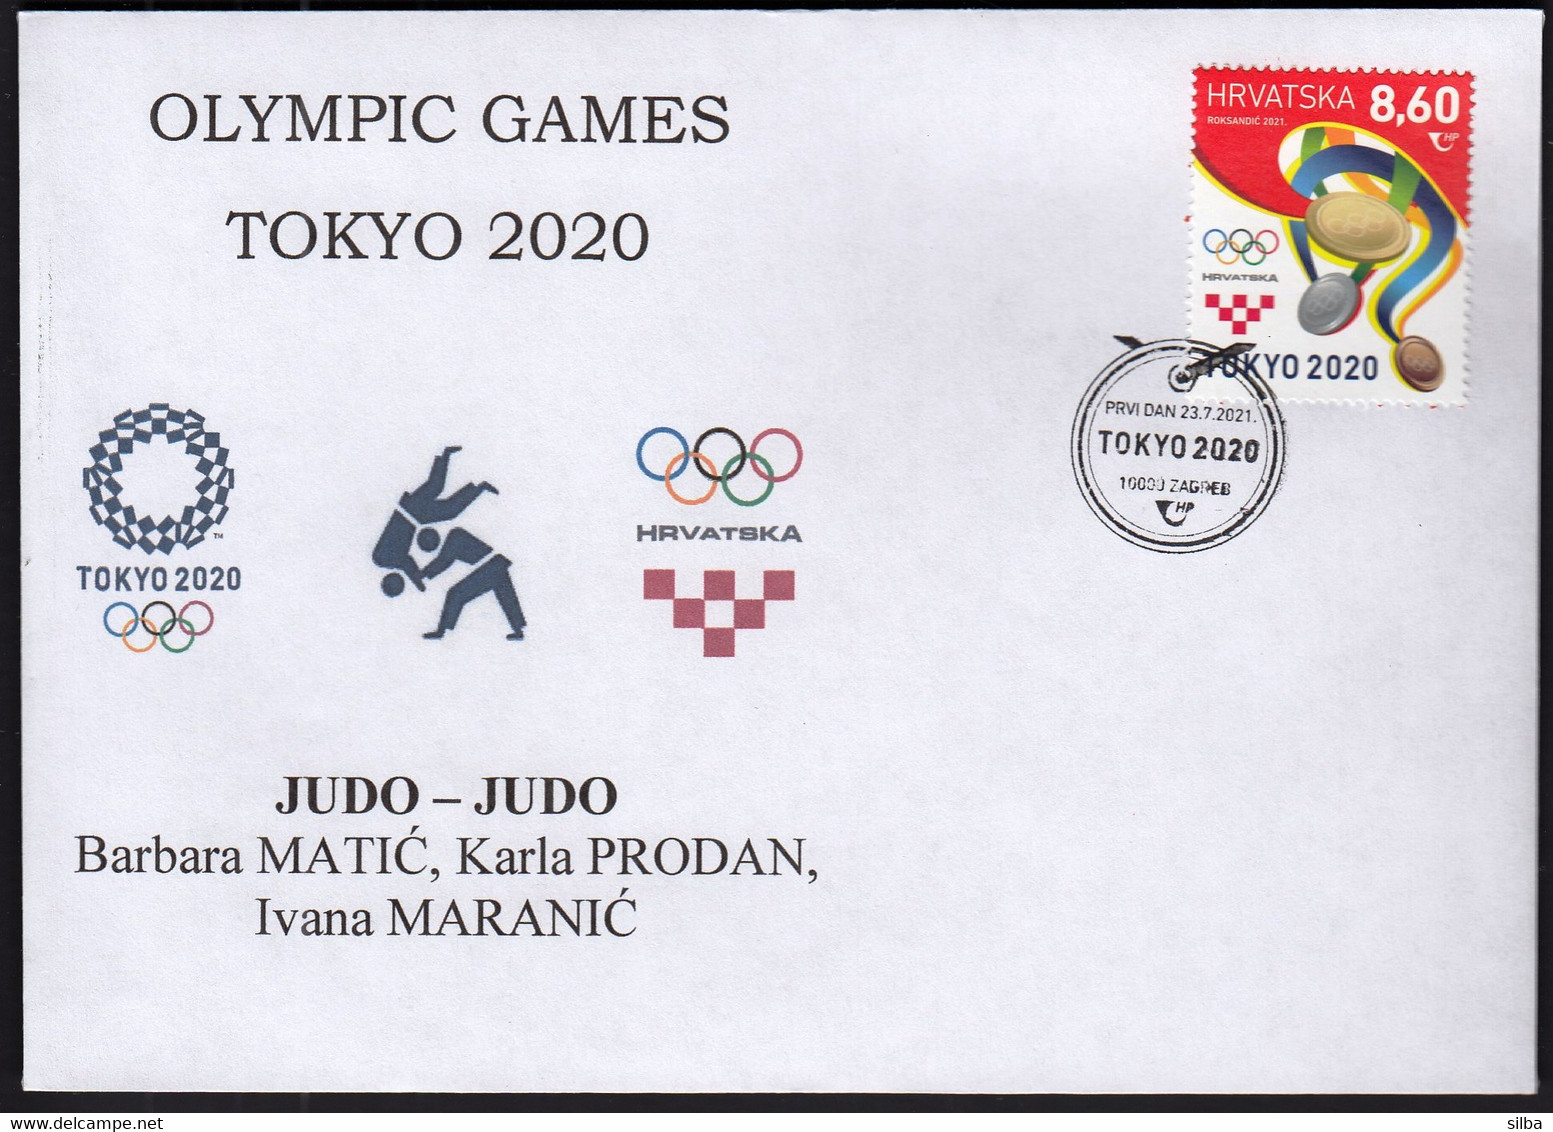 Croatia 2021 / Olympic Games Tokyo 2020 / Judo / Croatian Athletes / Medals - Summer 2020: Tokyo